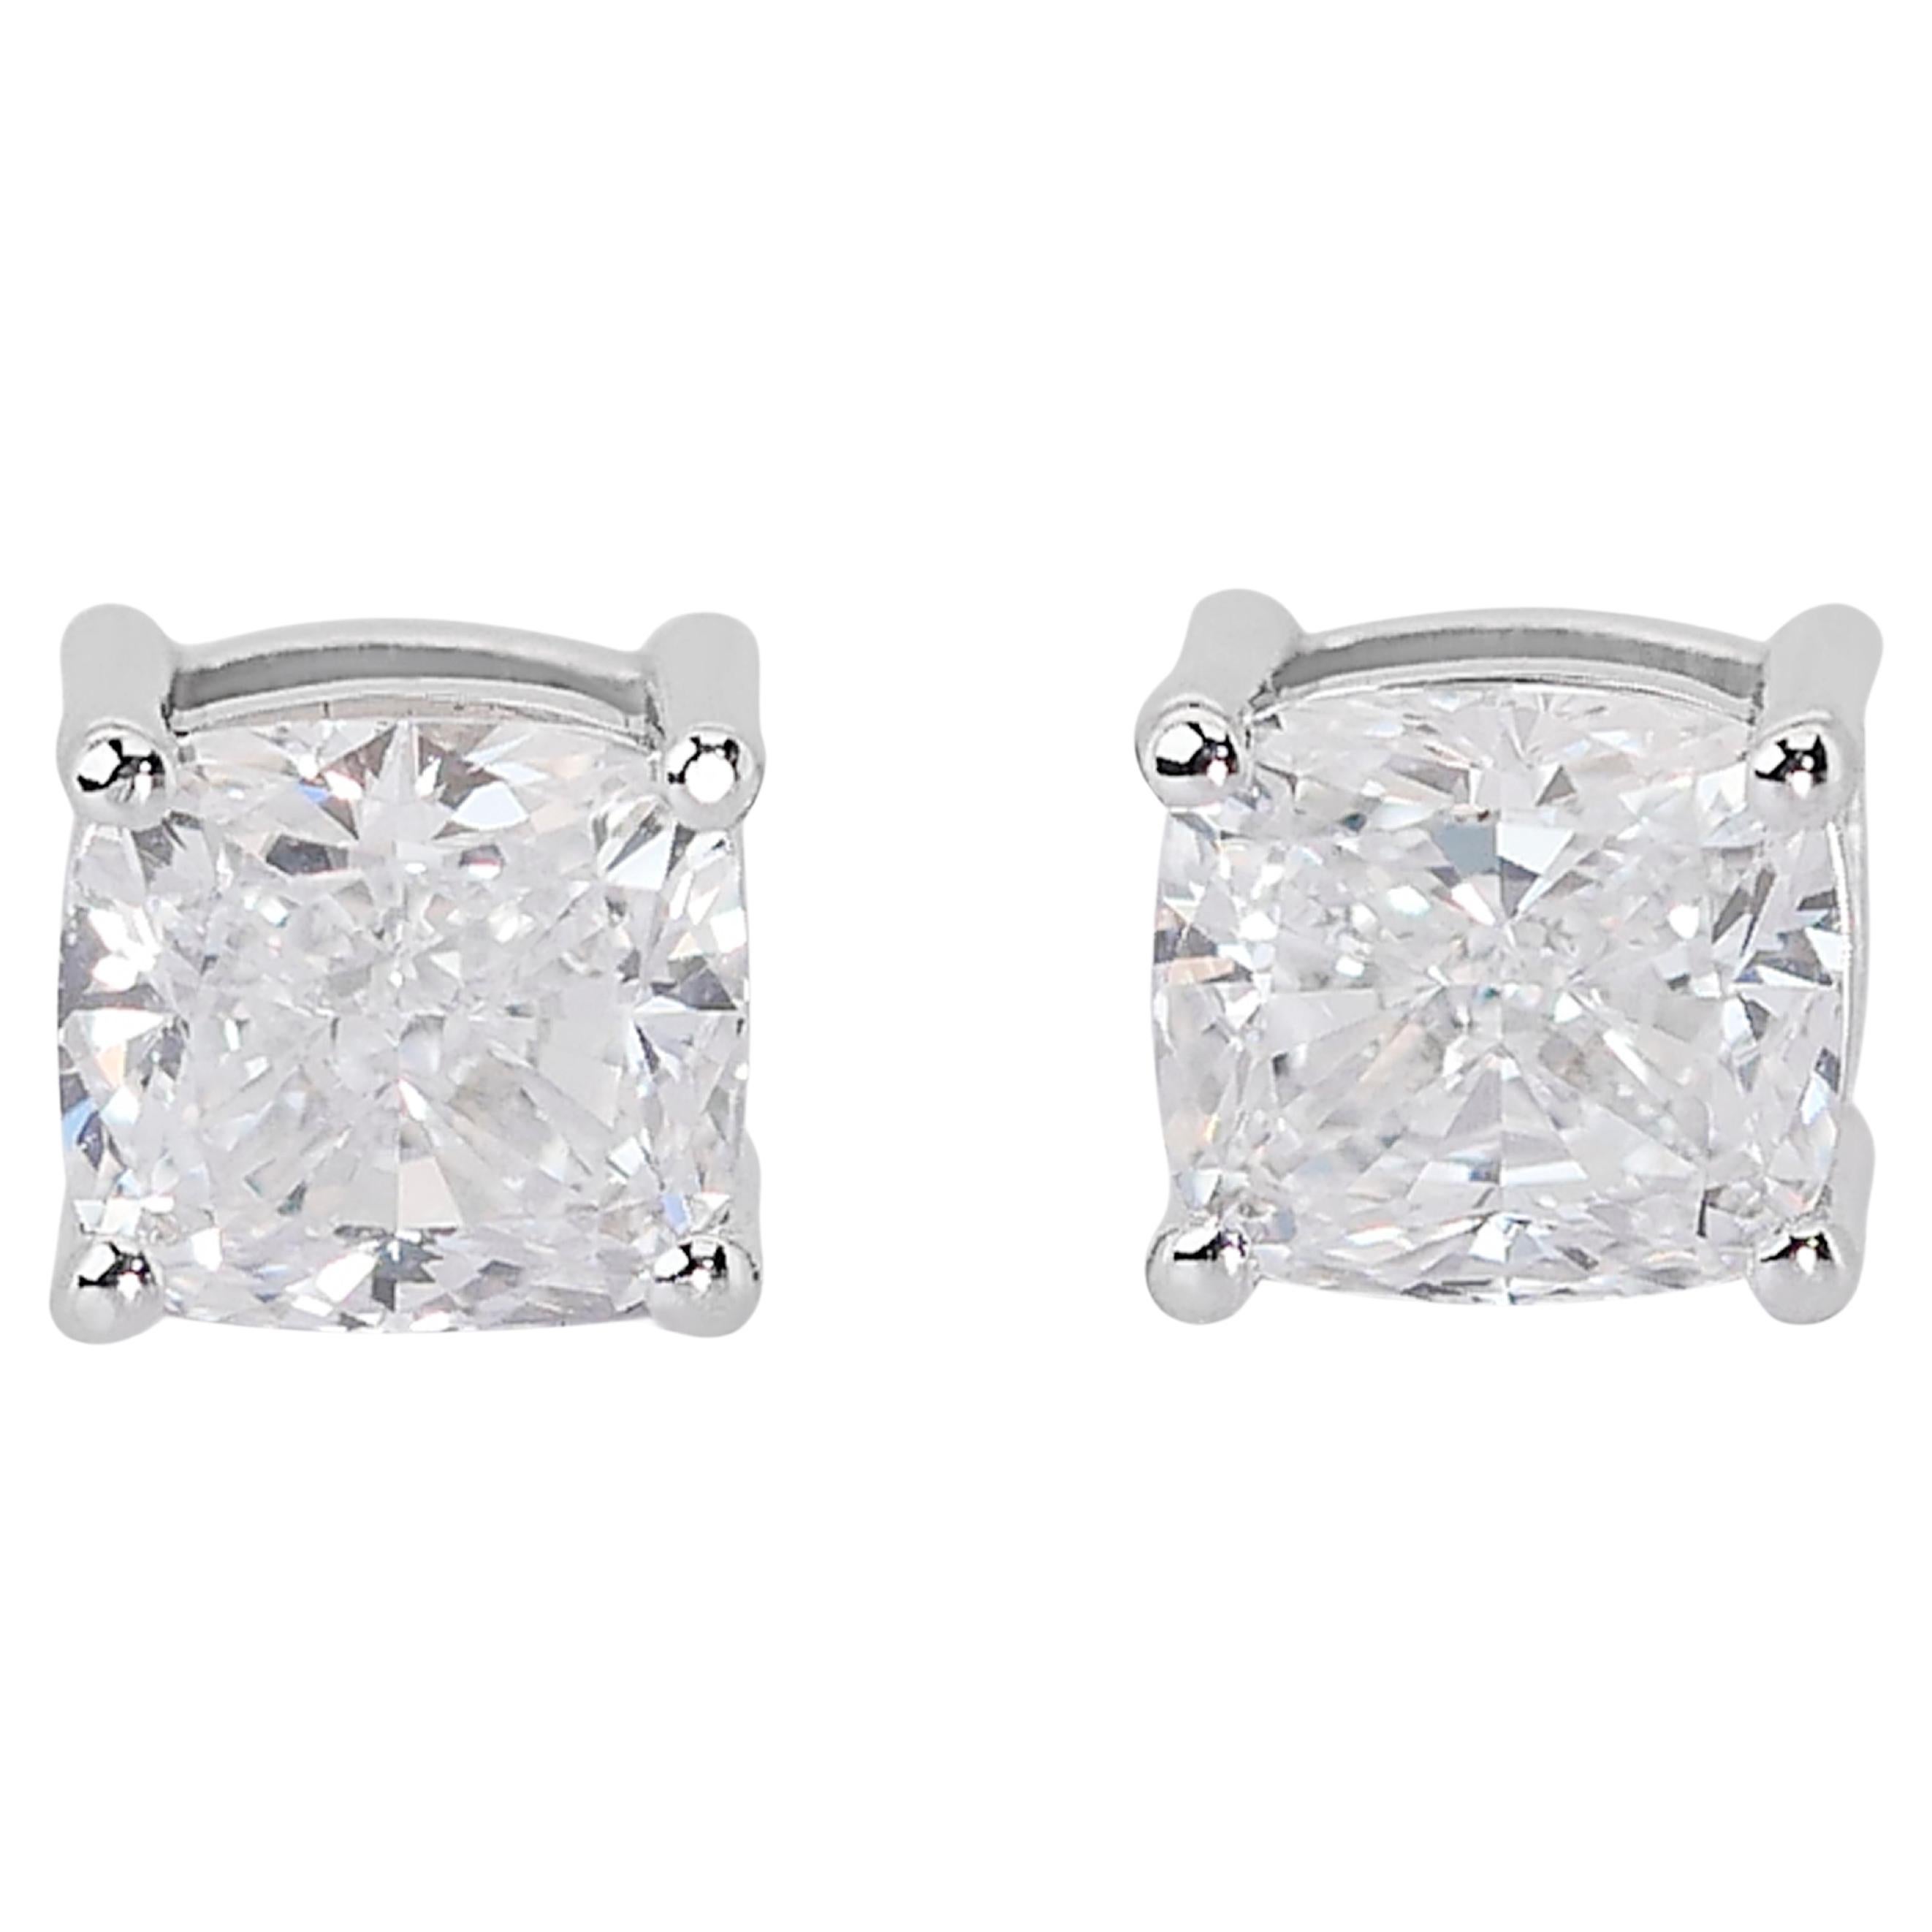 Lustrous 1.60ct Diamonds Stud Earrings in 18k White Gold - GIA Certified